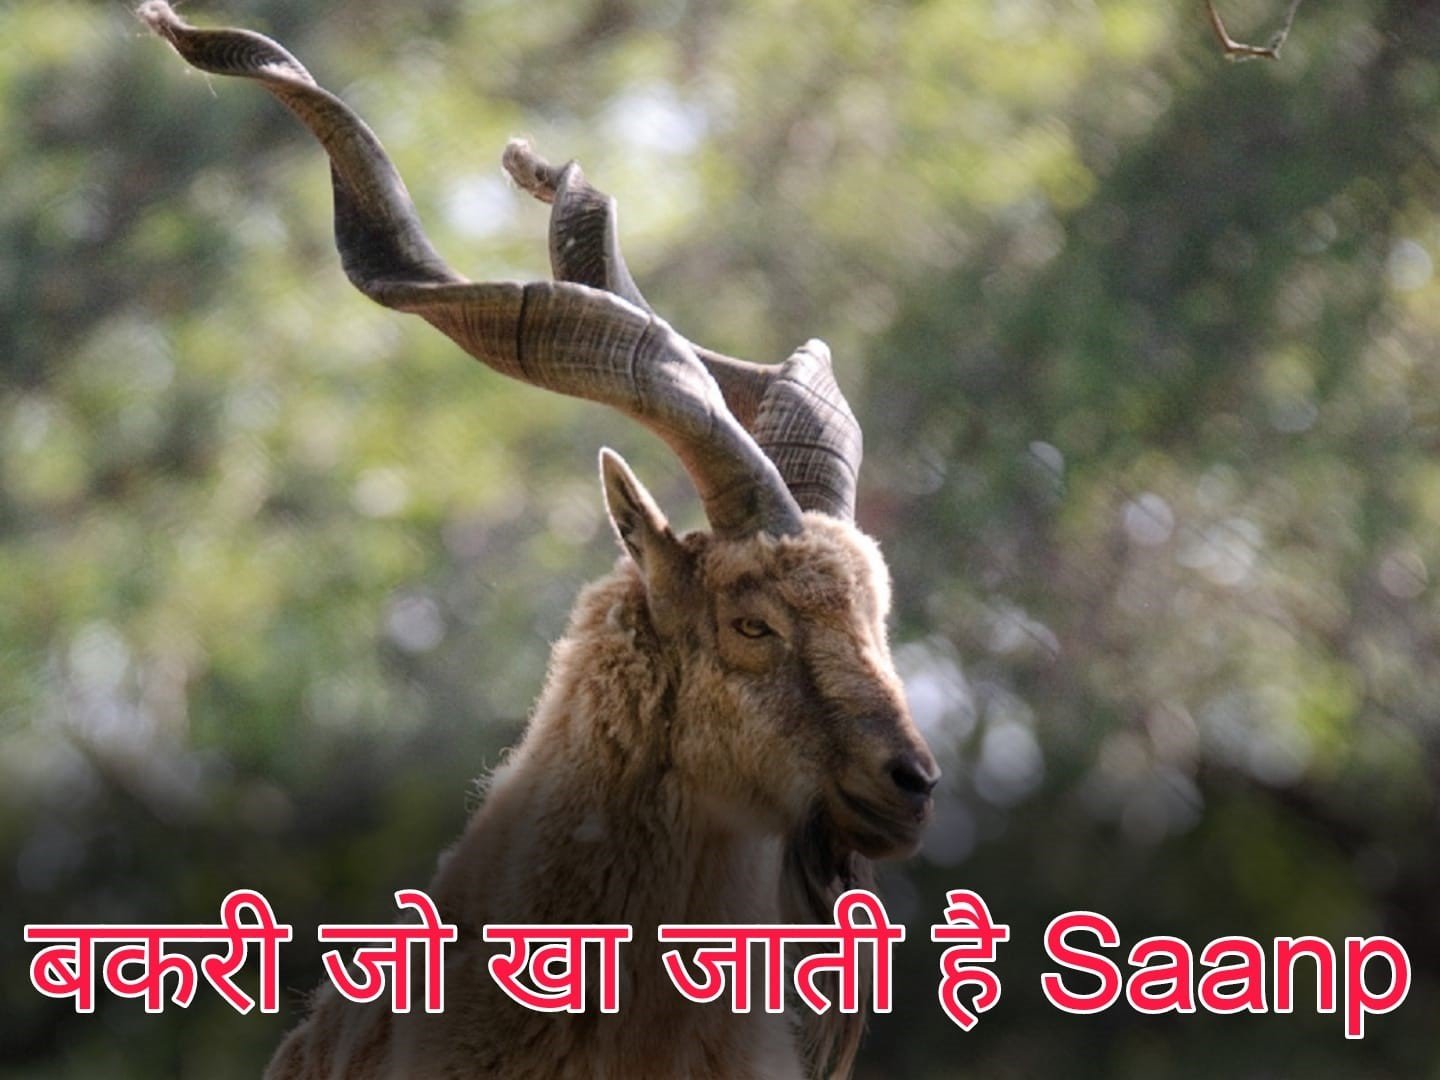 Saanp Khati Hai Bakri - Pakistan's national animal which eats Saanp